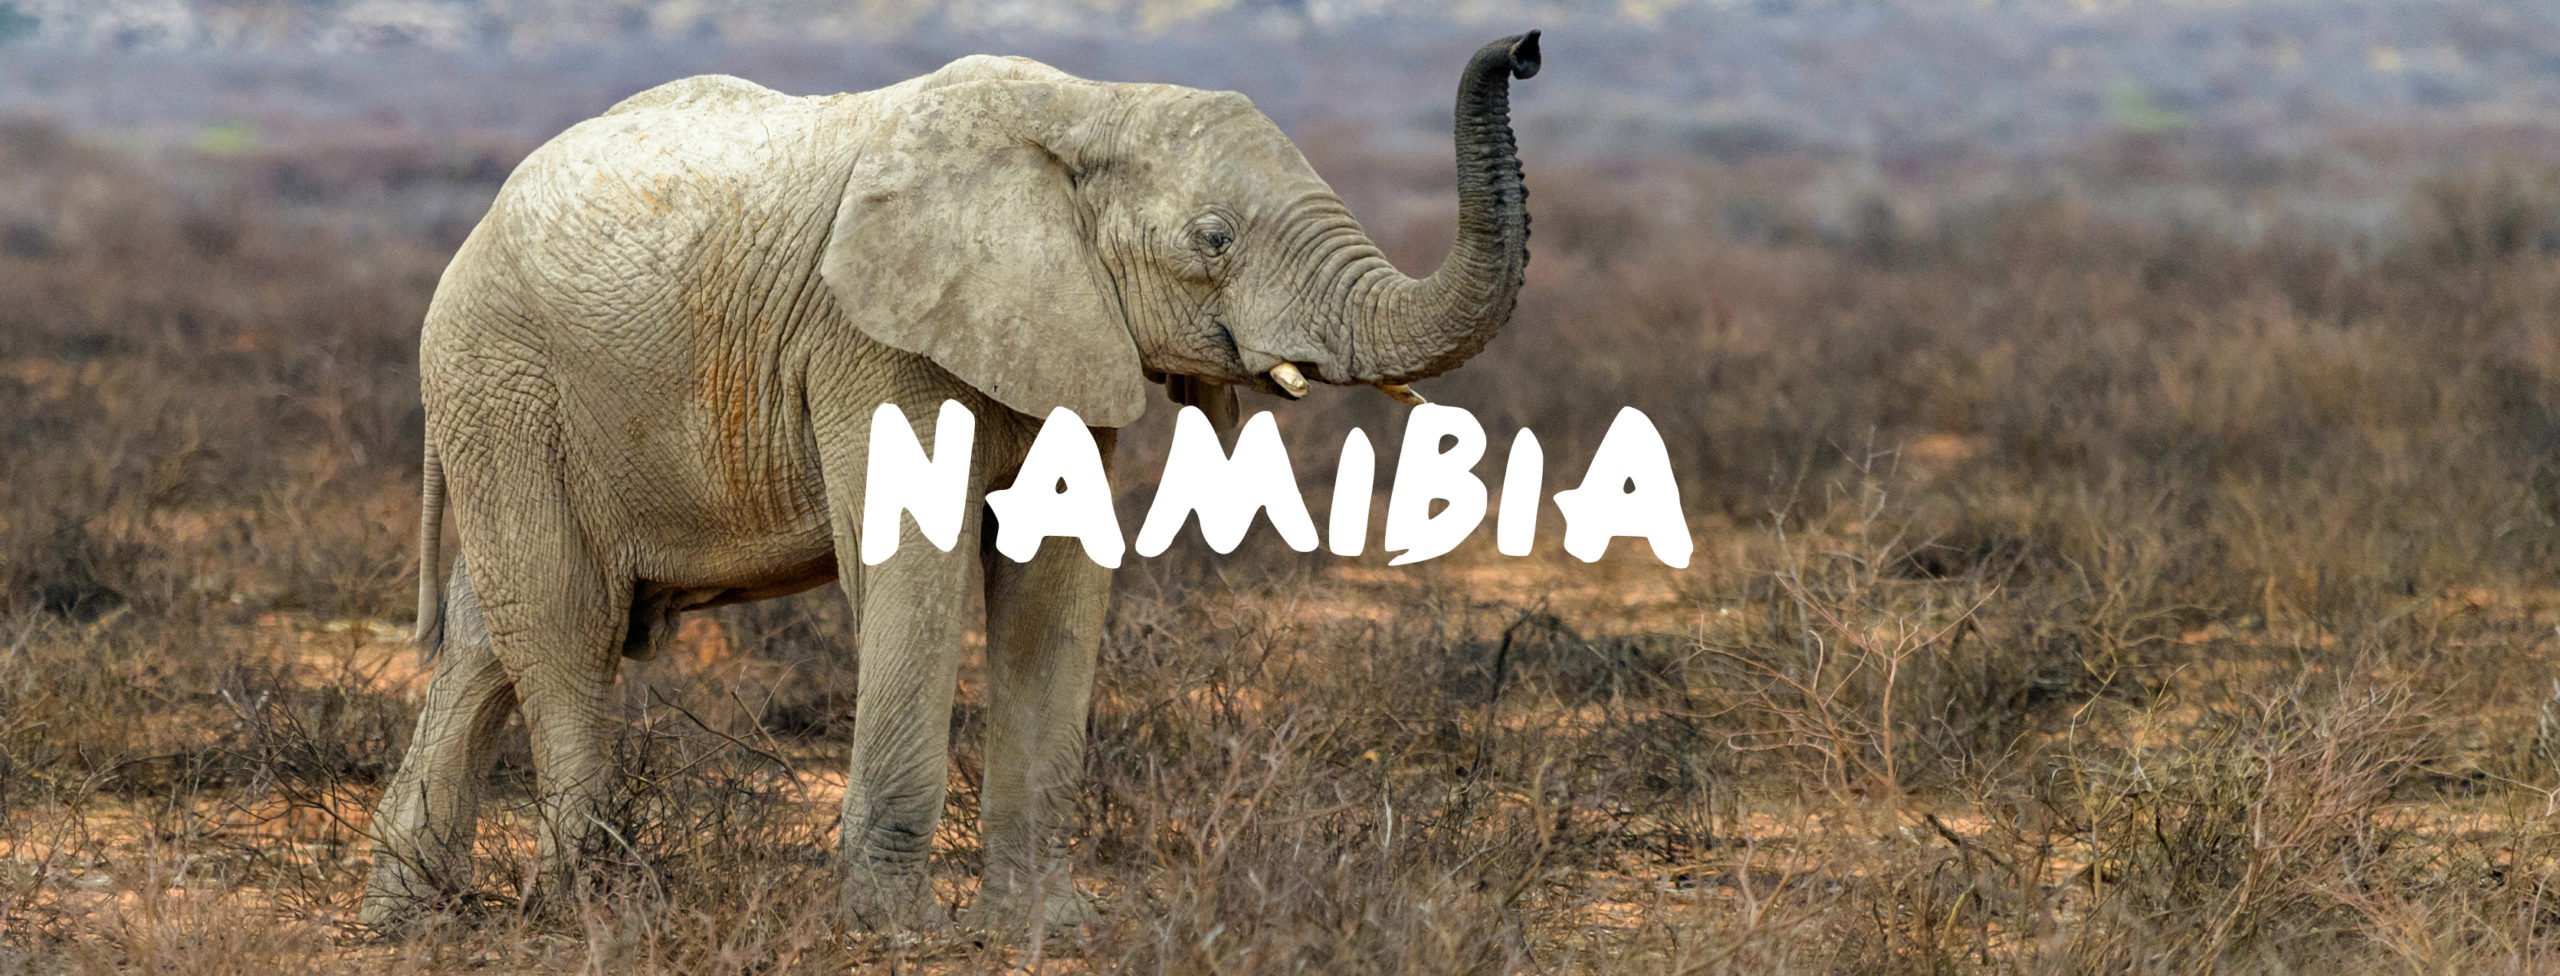 Namibia Urlaub buchen im Reisebüro Rosenheim Wagner Reisen Raubling